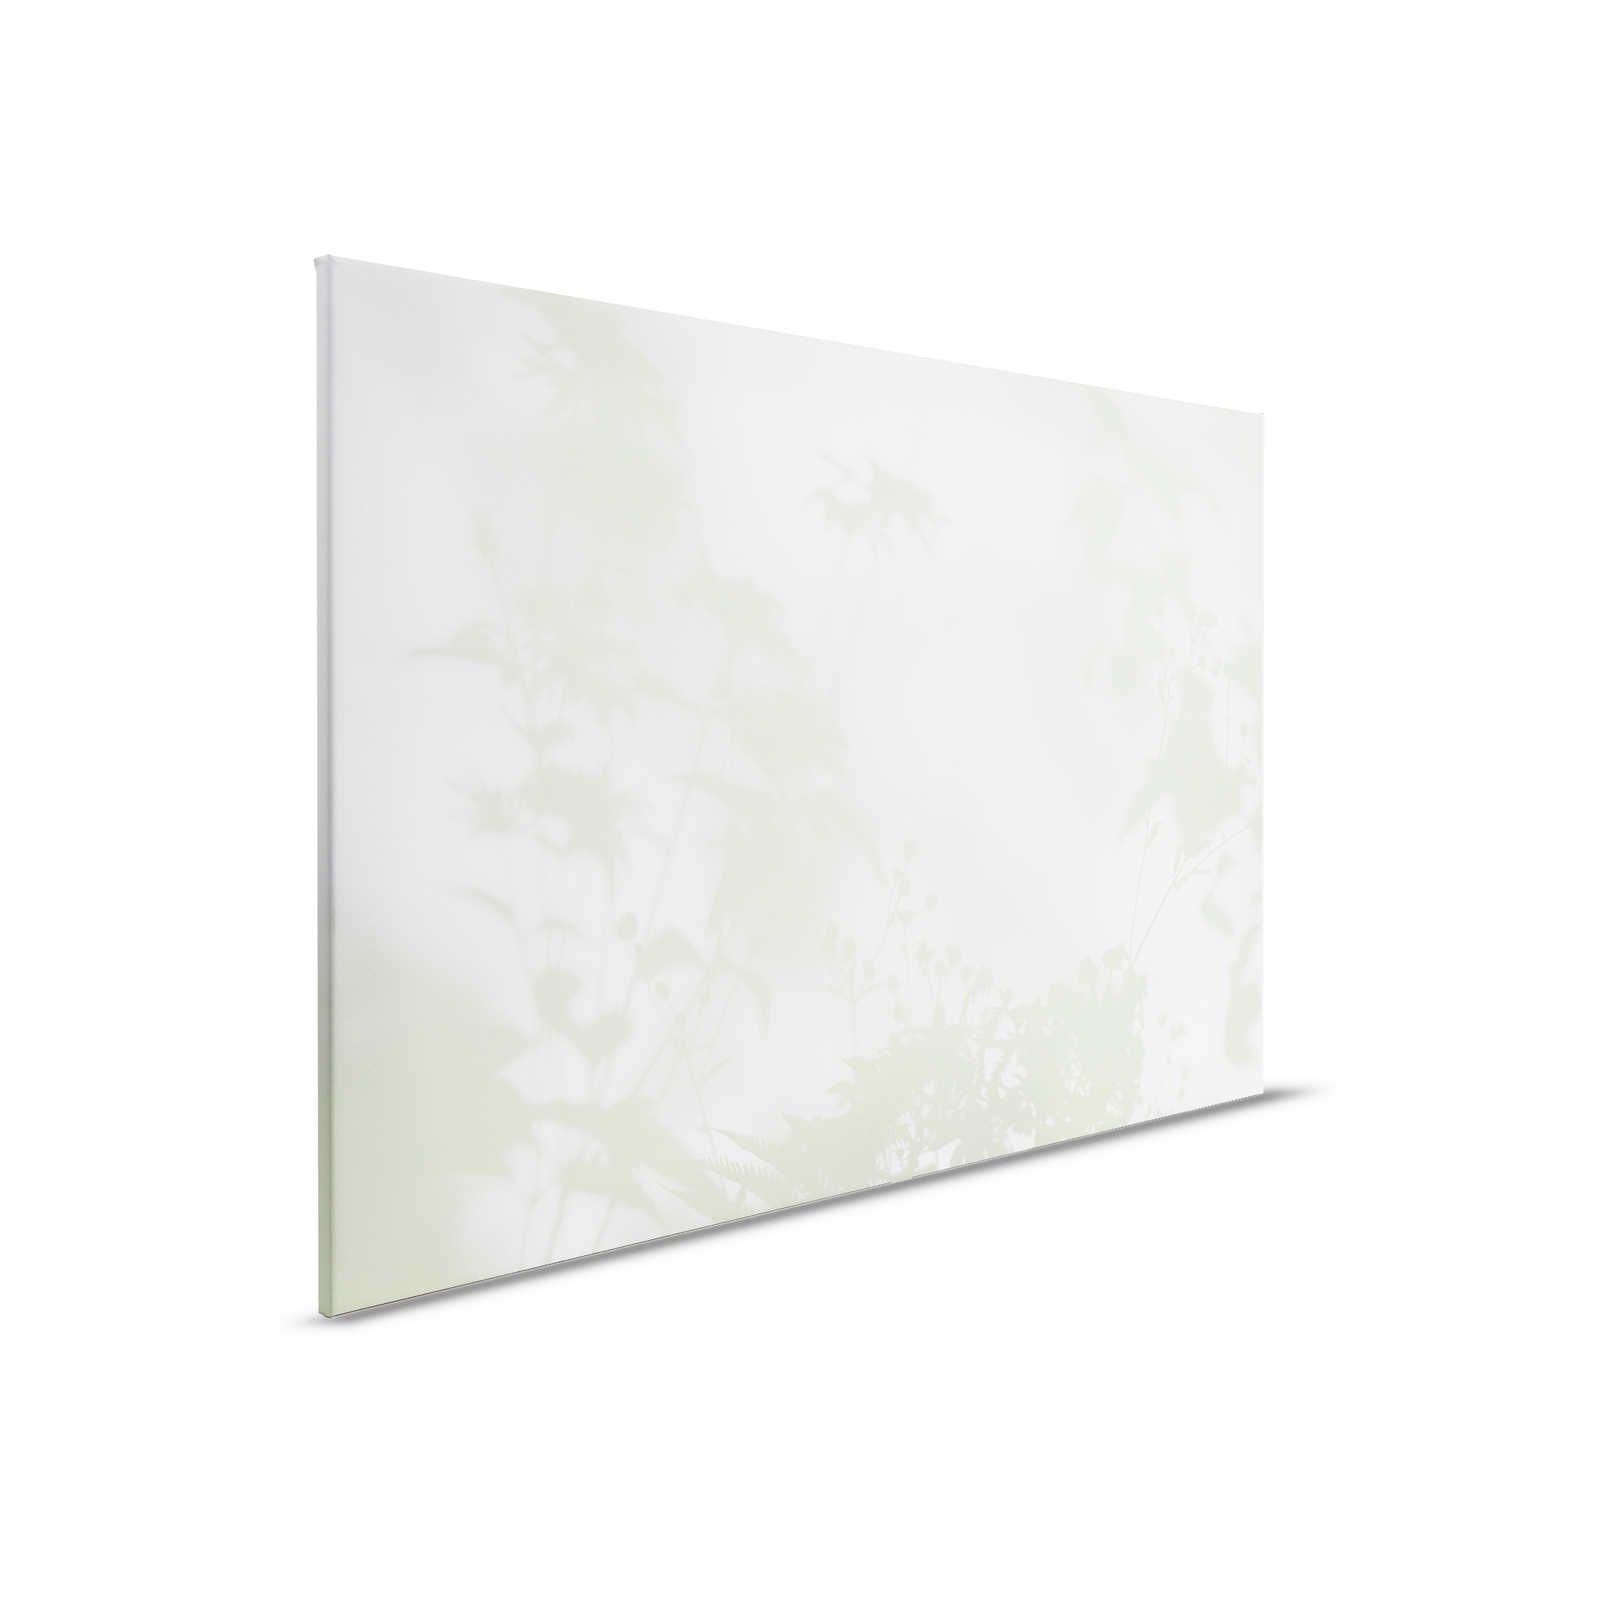 Camera d'ombra 3 - Pittura su tela naturale verde e bianca, disegno sbiadito - 0,90 m x 0,60 m
